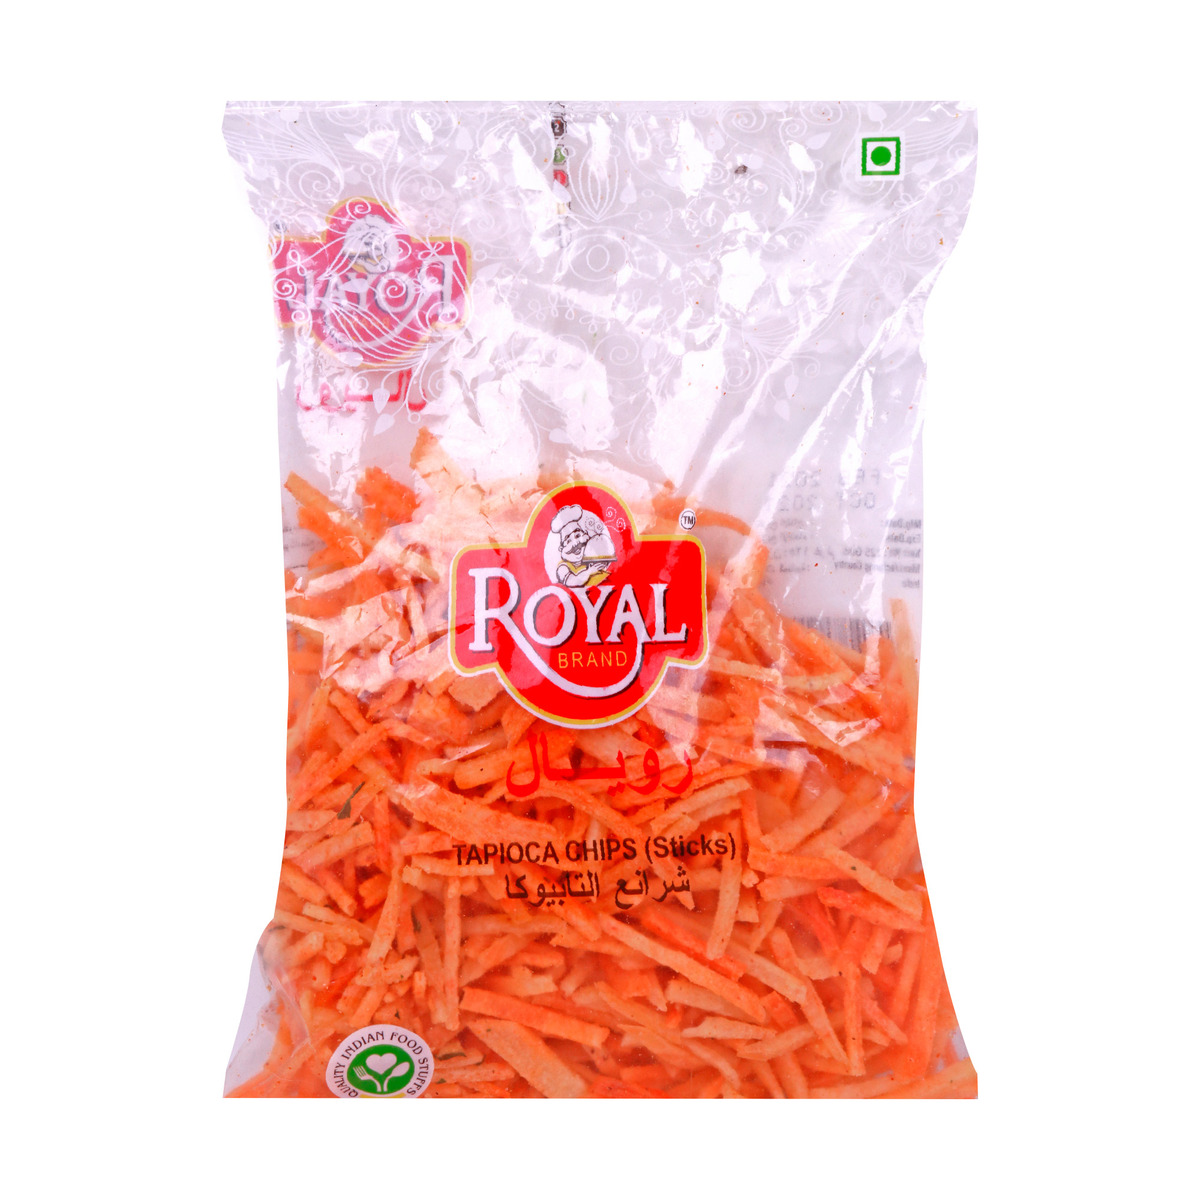 Royal Tapioca Chips Sticks 125g